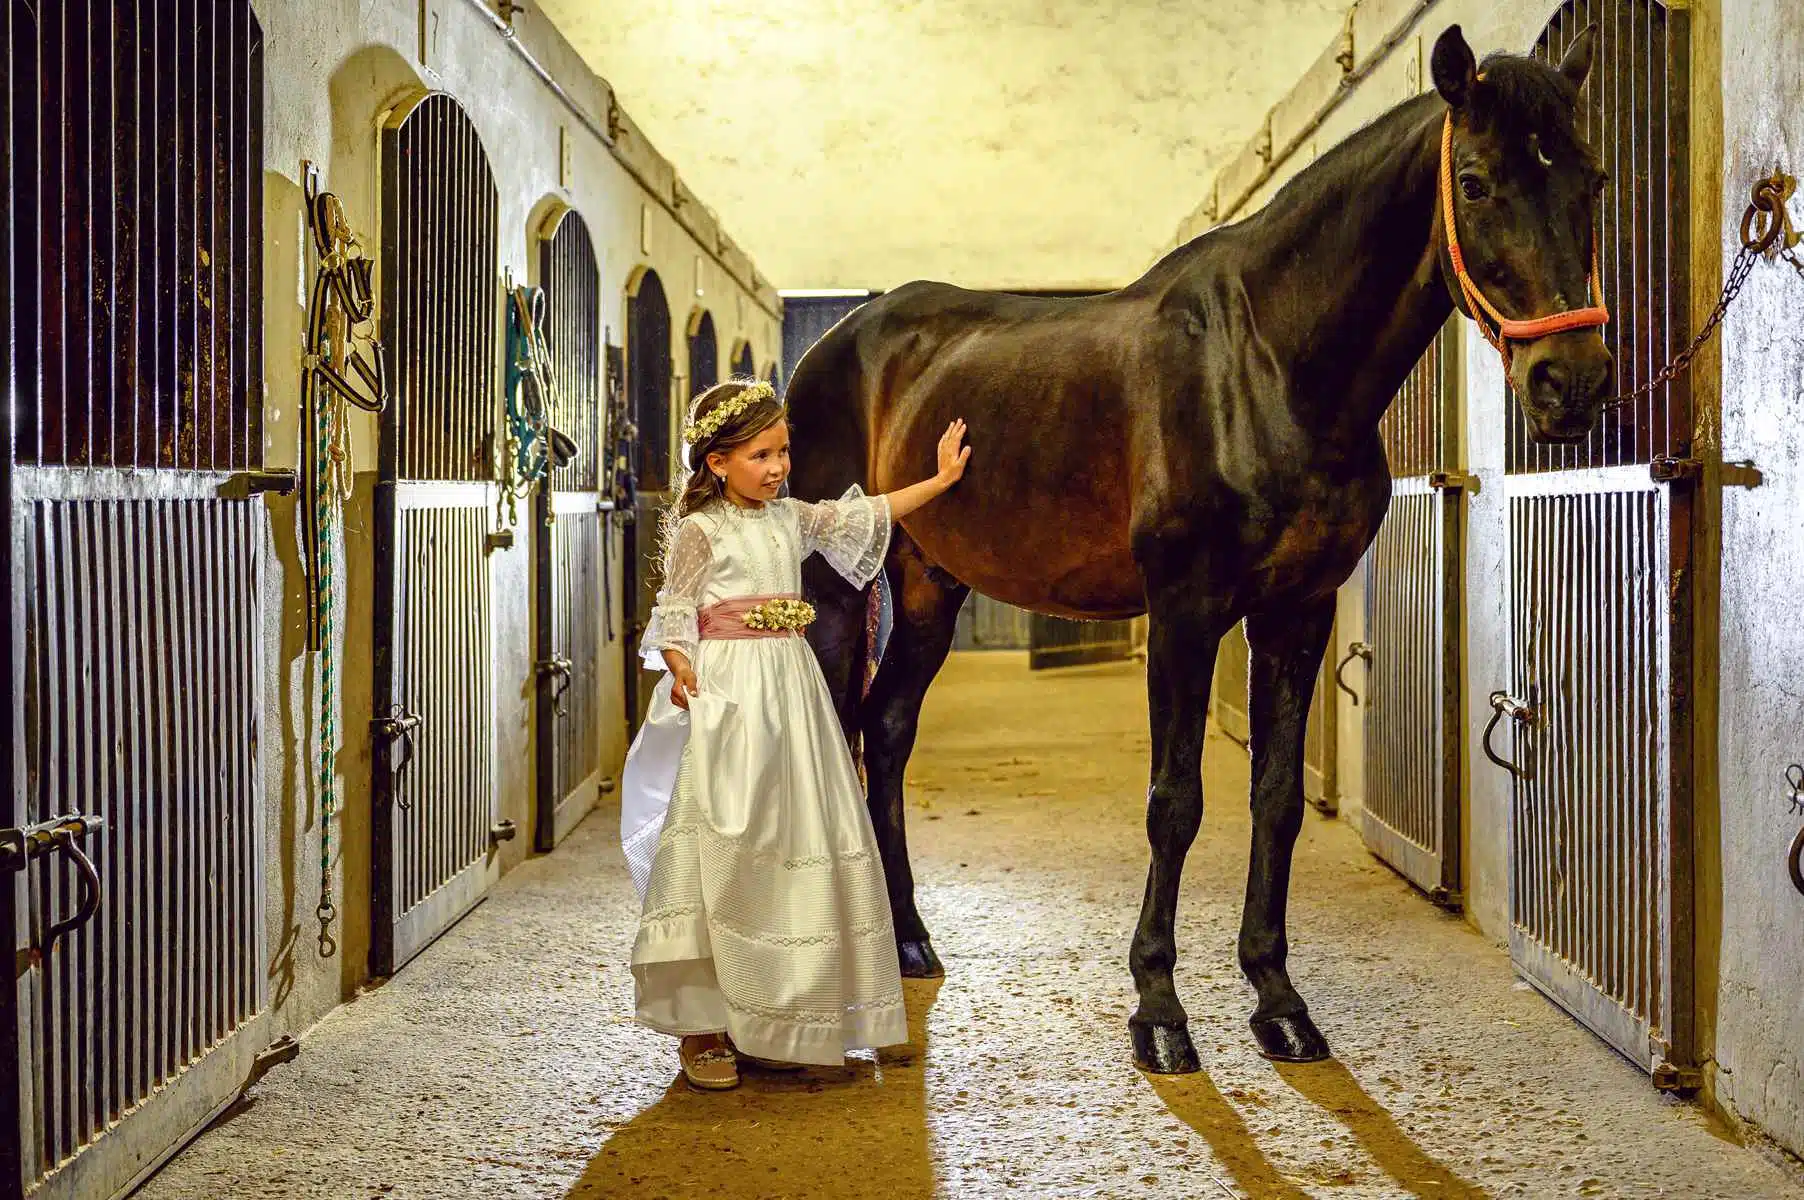 Fotos de Comunión con caballos en cuadra